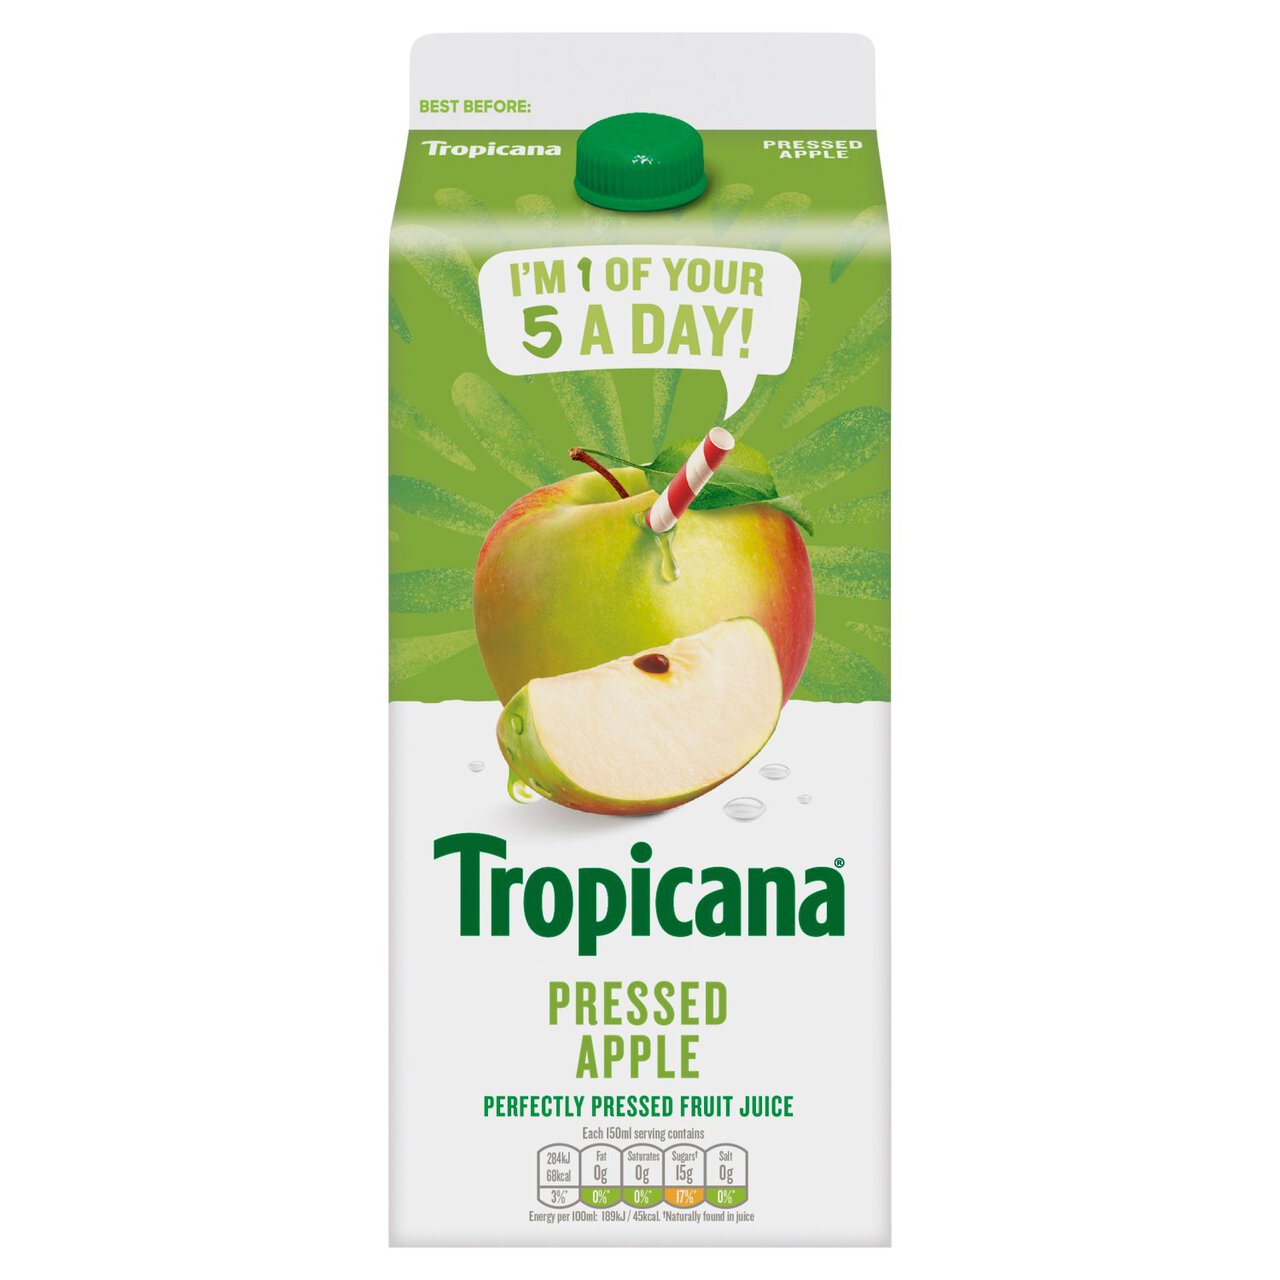 Tropicana Pressed Apple Juice 1.7l